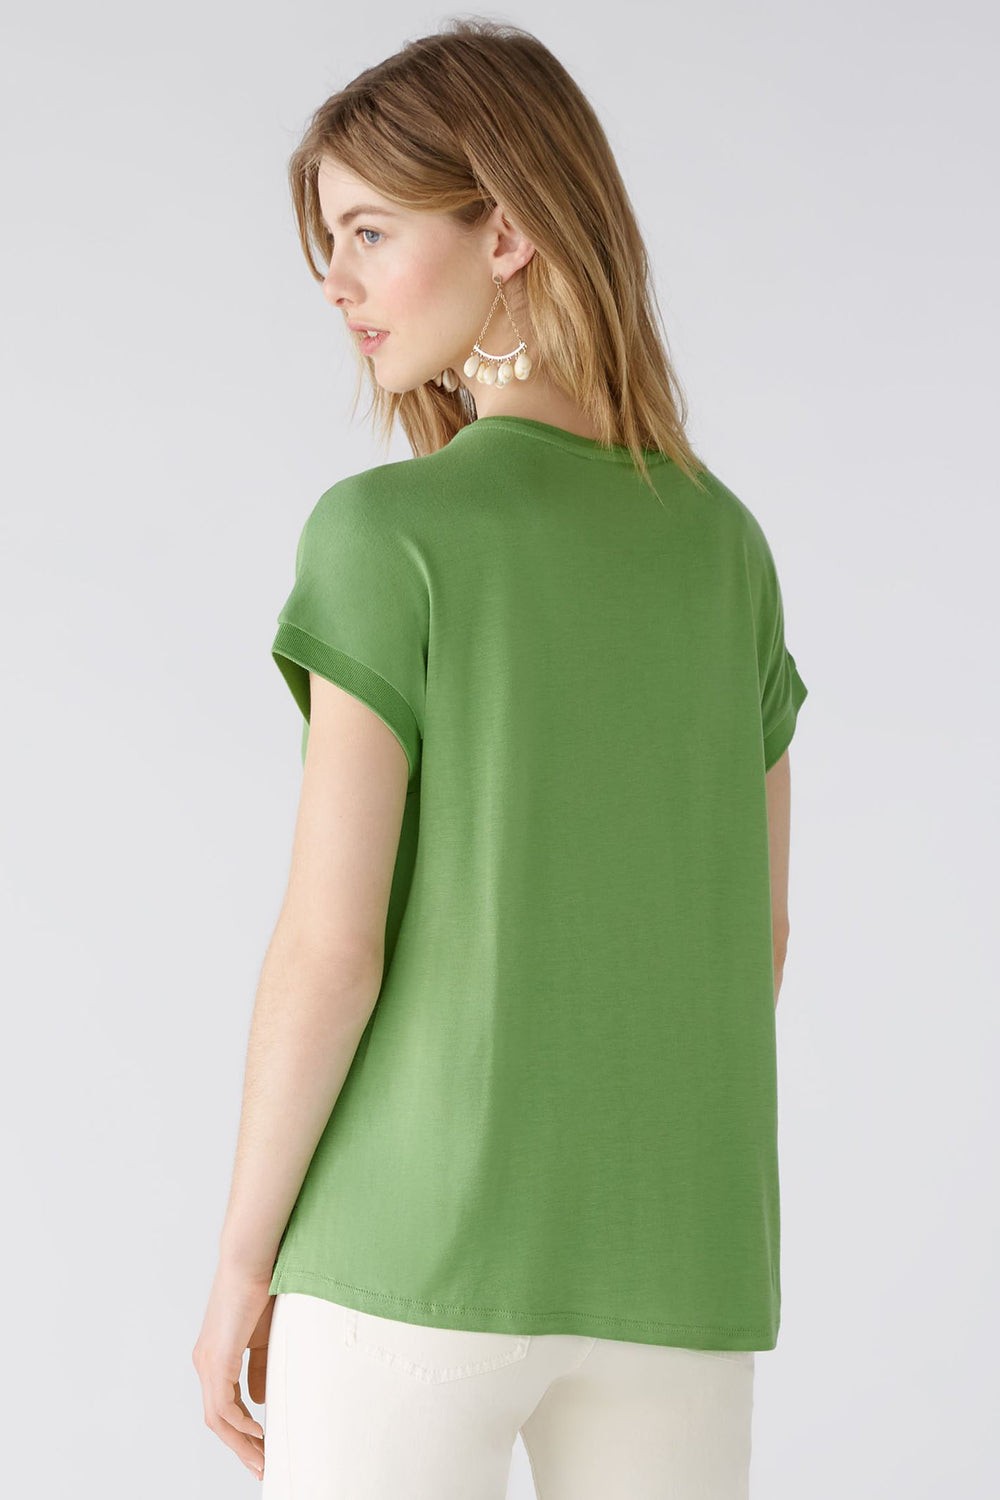 Oui 88335 Green Ayano Wide Neck Cap Sleeve Top - Olivia Grace Fashion